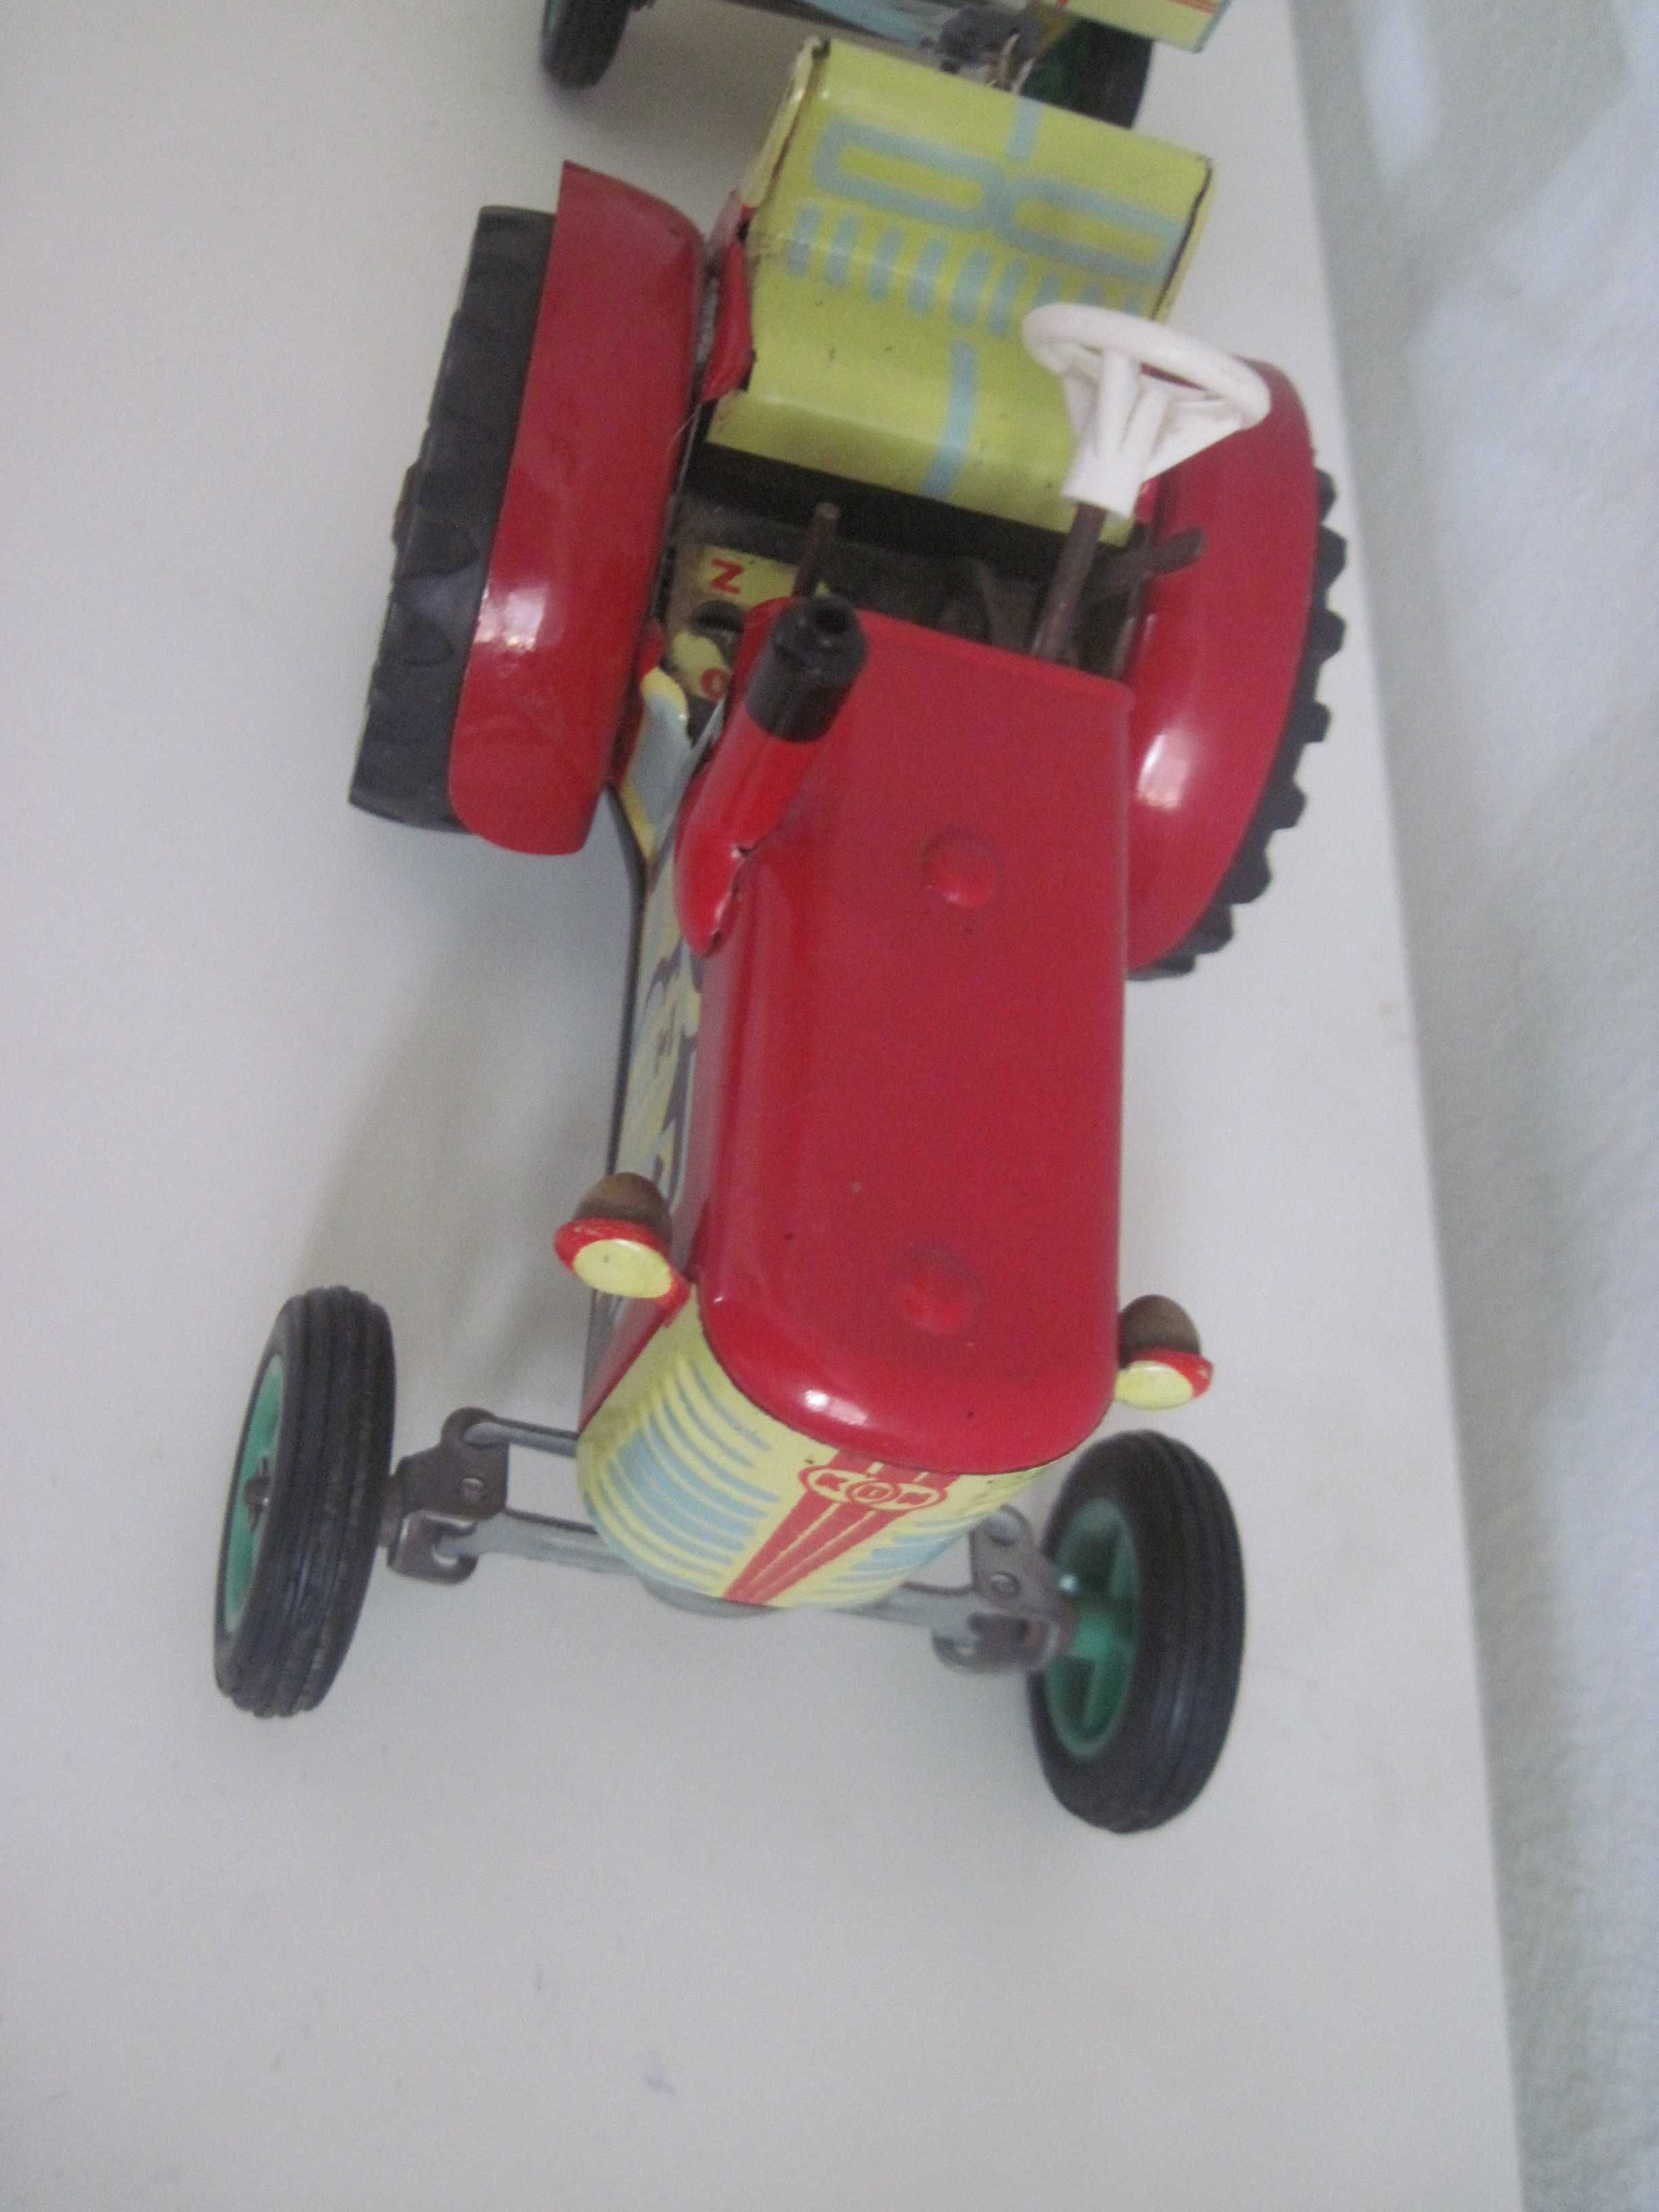 трактор игрушка чехословакия kovap zetor